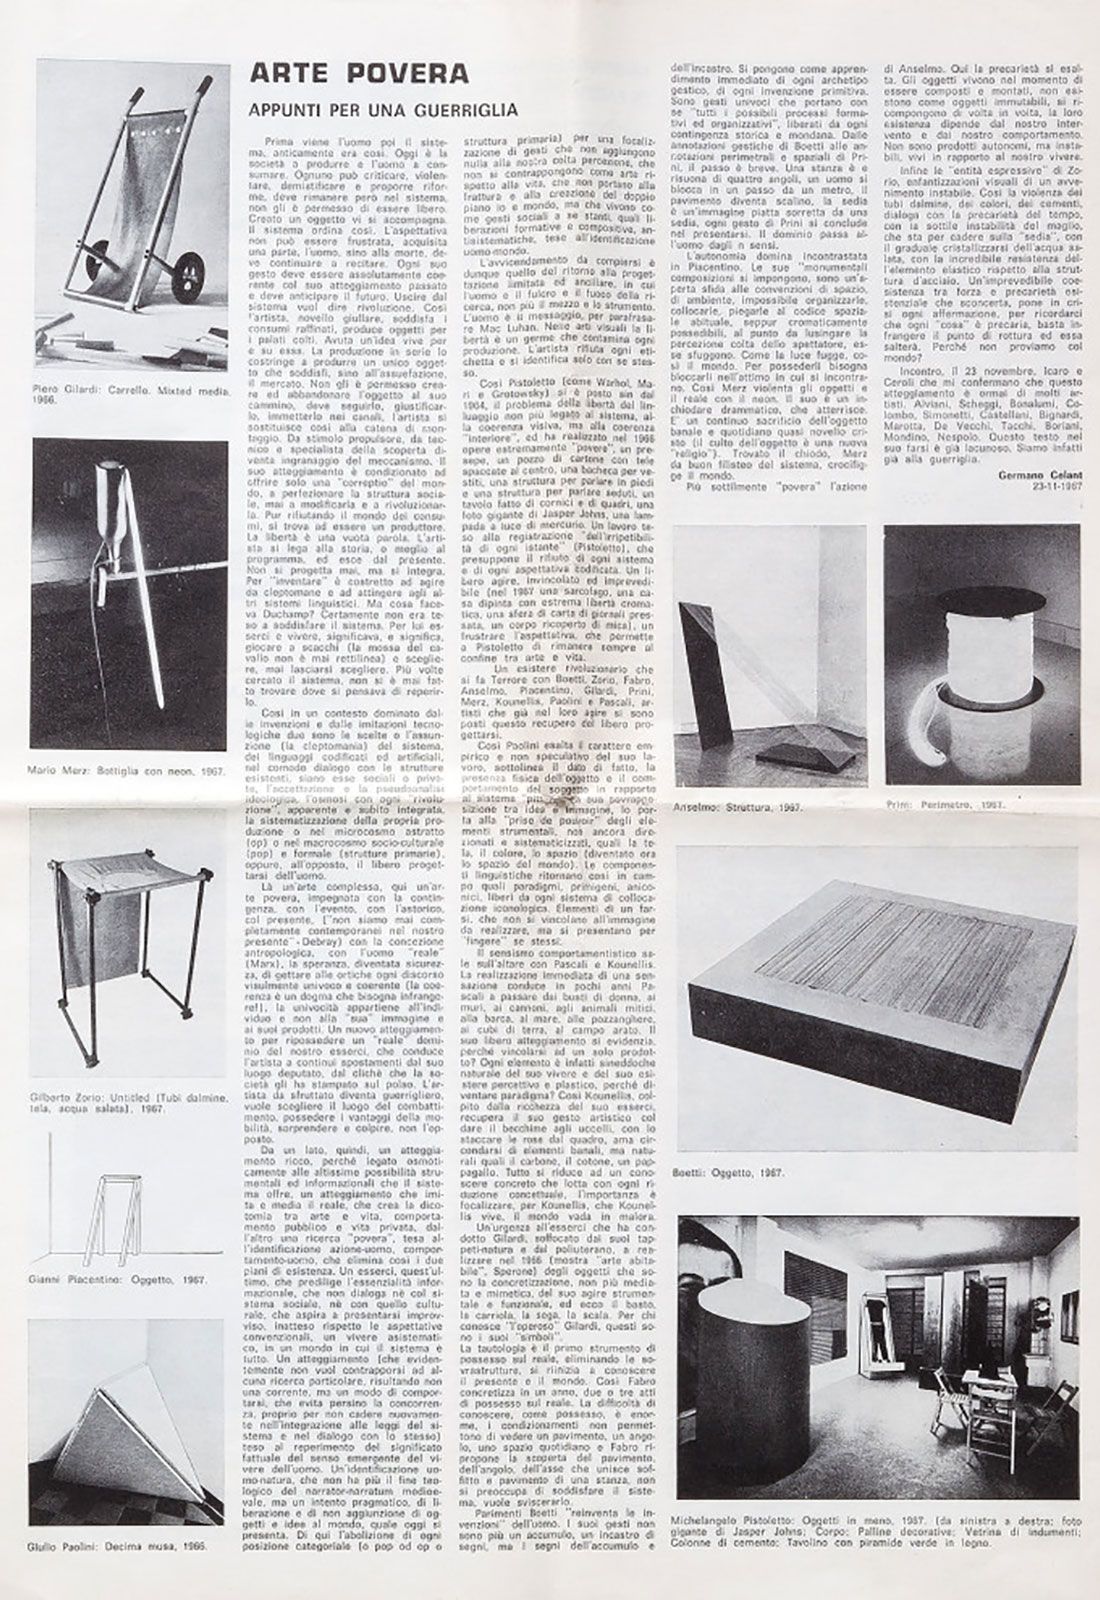 Germano Celant, &lsquo;Arte Povera: appunti per una guerriglia&rsquo;, Flash Art, n. 5, 1967

&nbsp;
